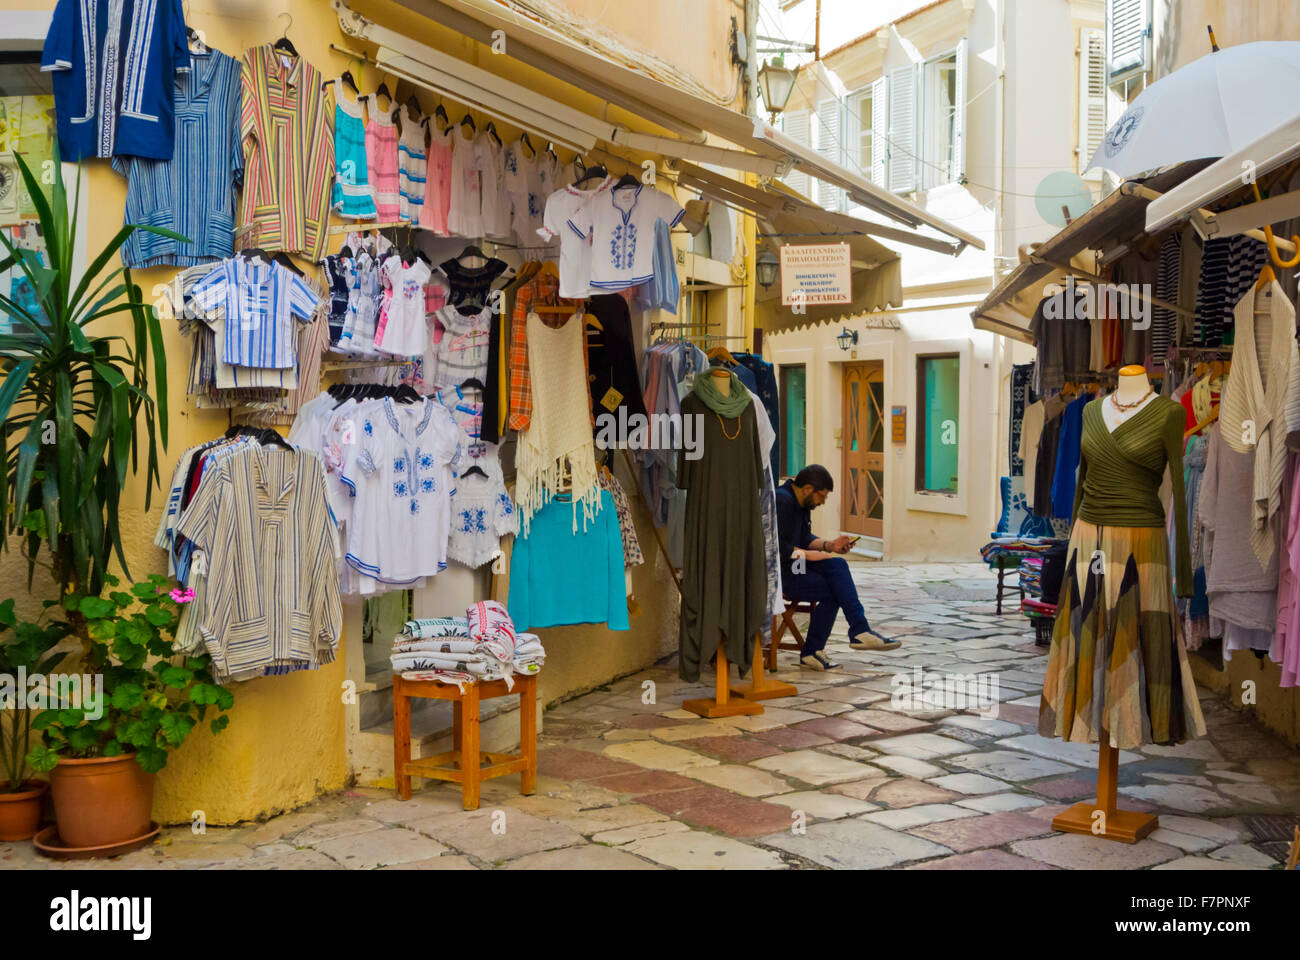 Clothing shop, Old town, Corfu , Ionian islands, Greece Stock Photo - Alamy